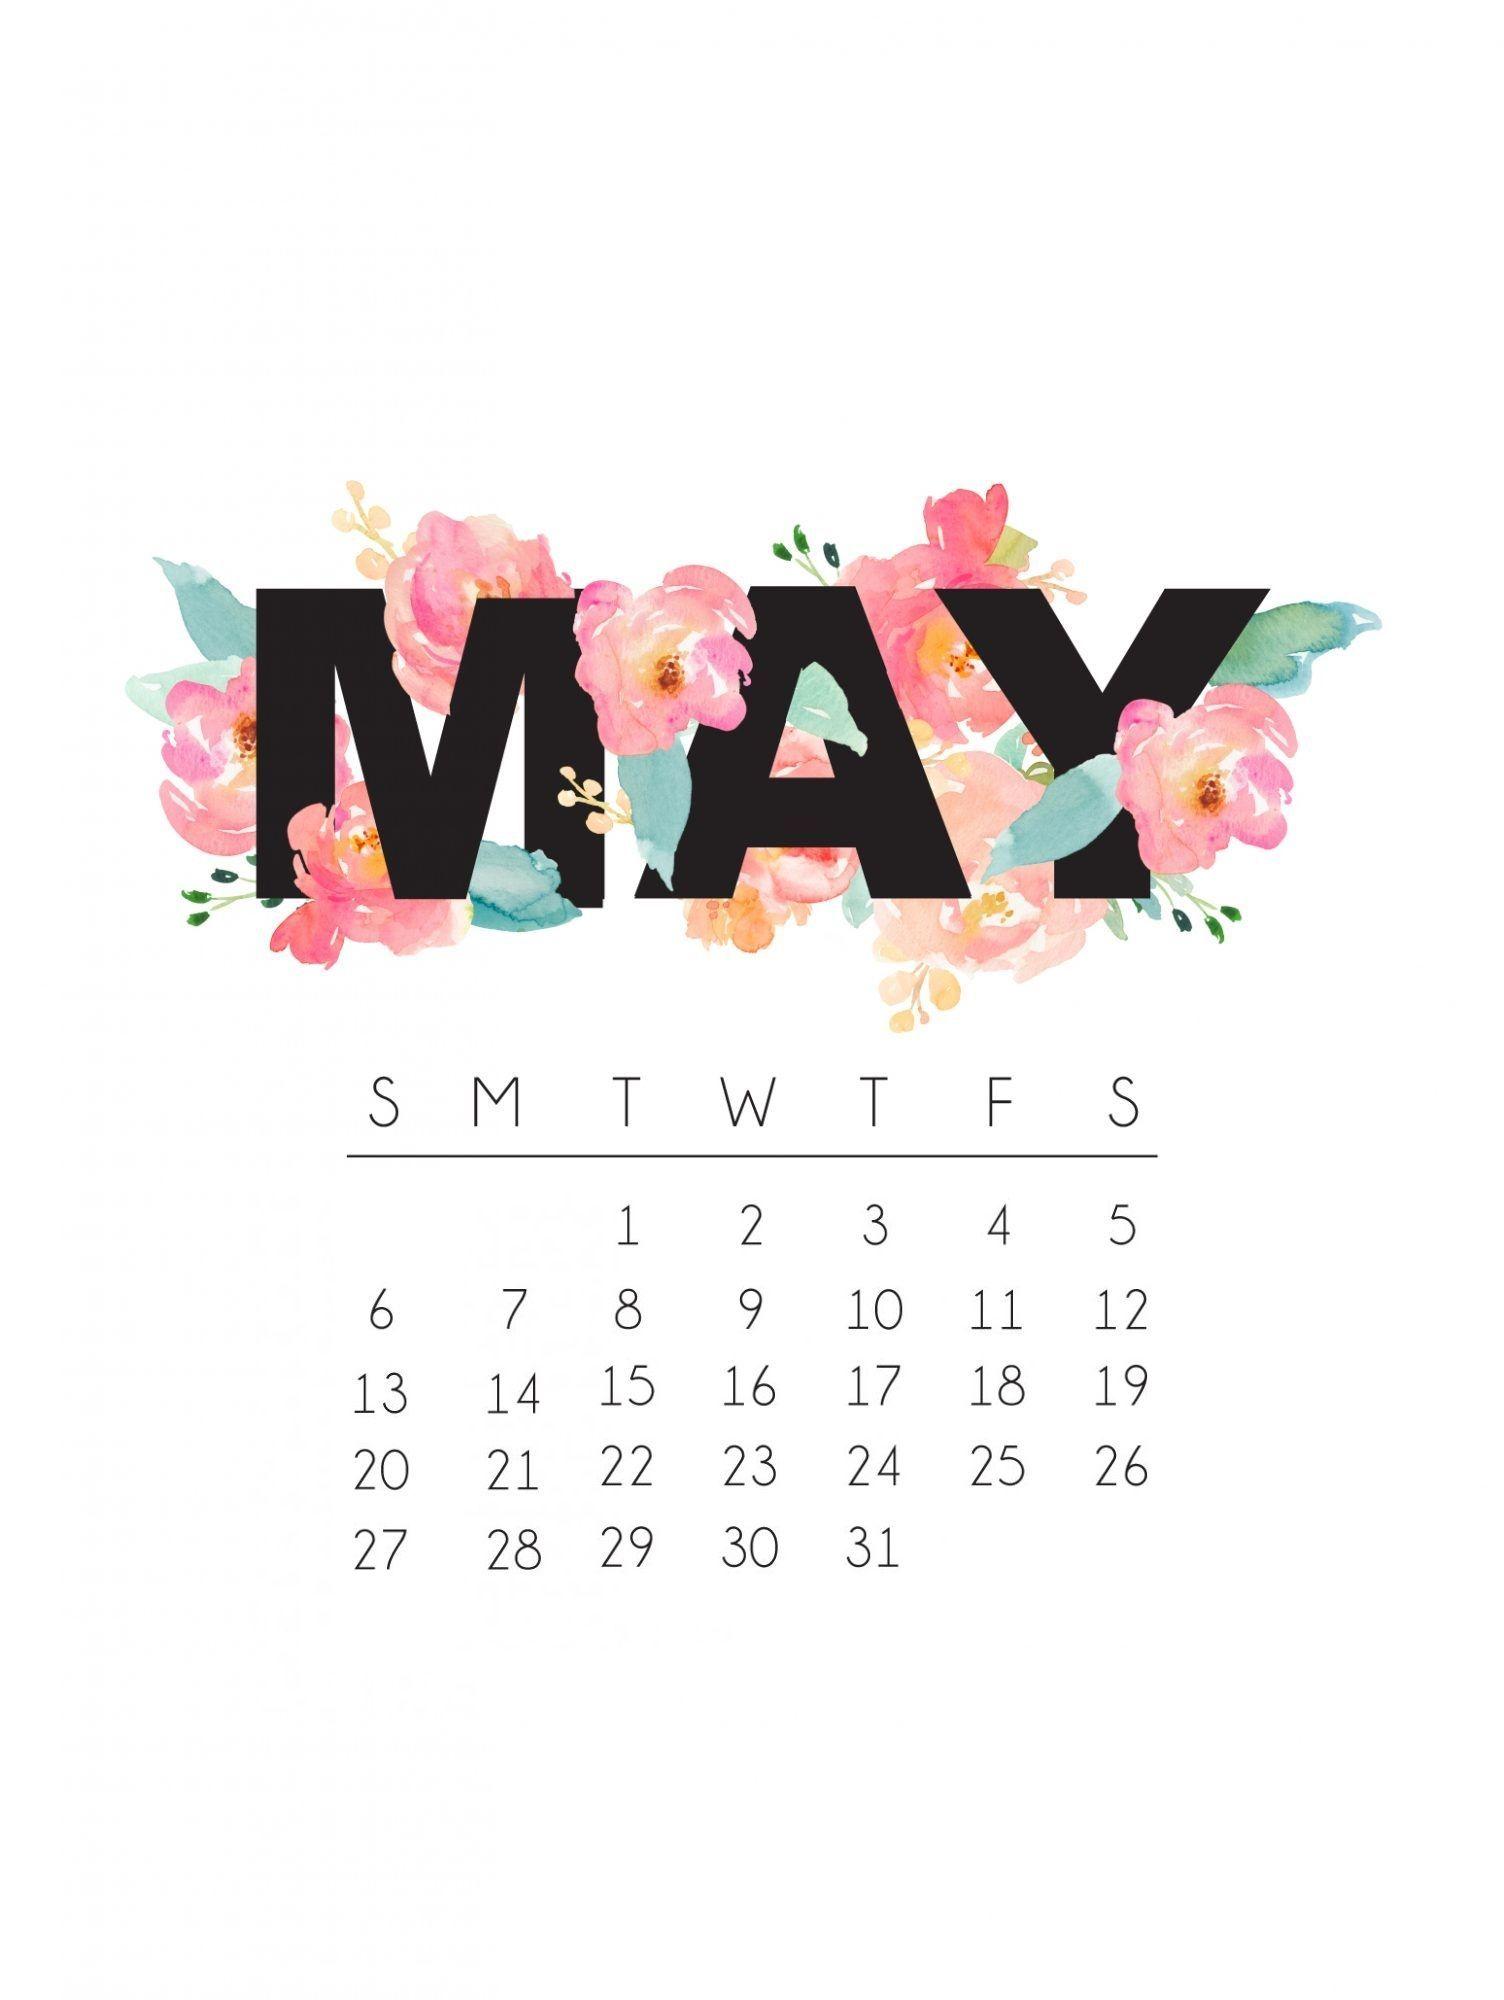 May 2018 iPhone Calendar Wallpaper. wallpaper